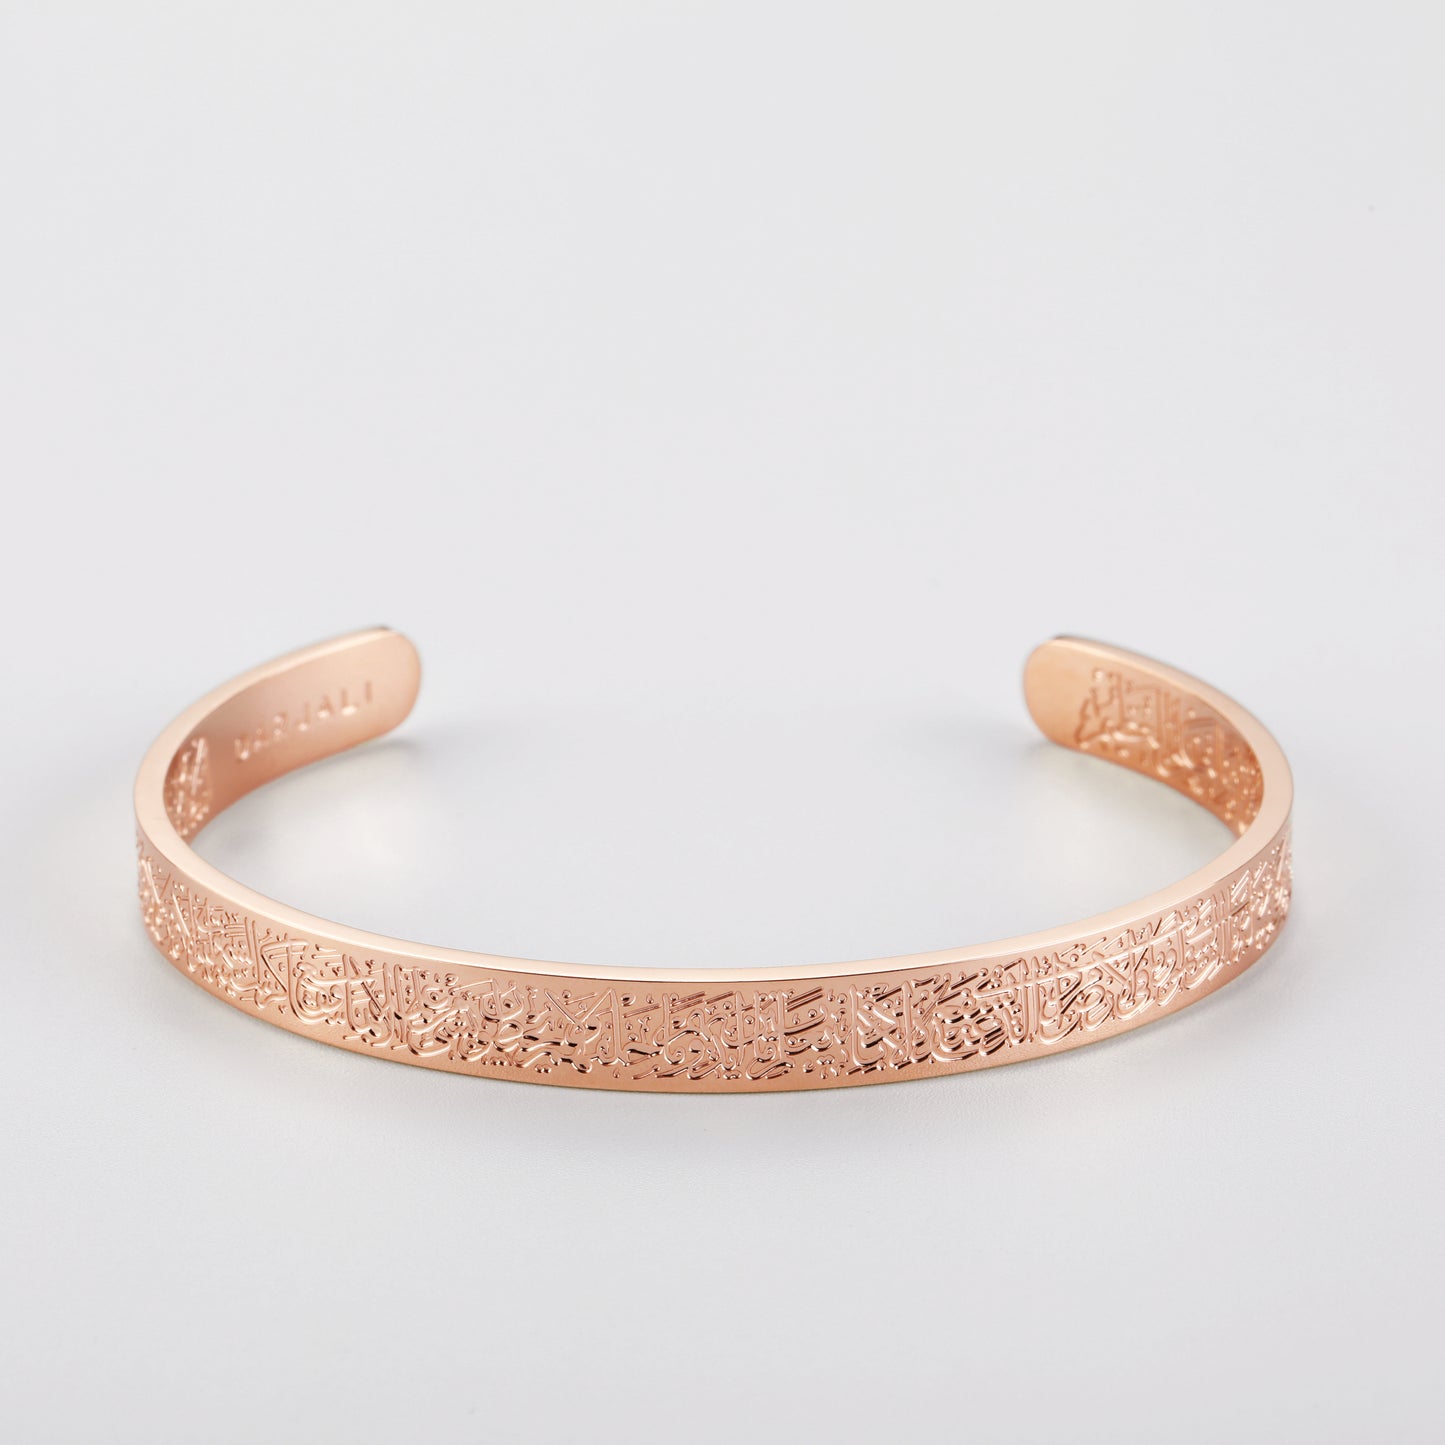 Darjali Jewelry Ayat Al-Kursi Bangle Bracelet 18K Rose Gold